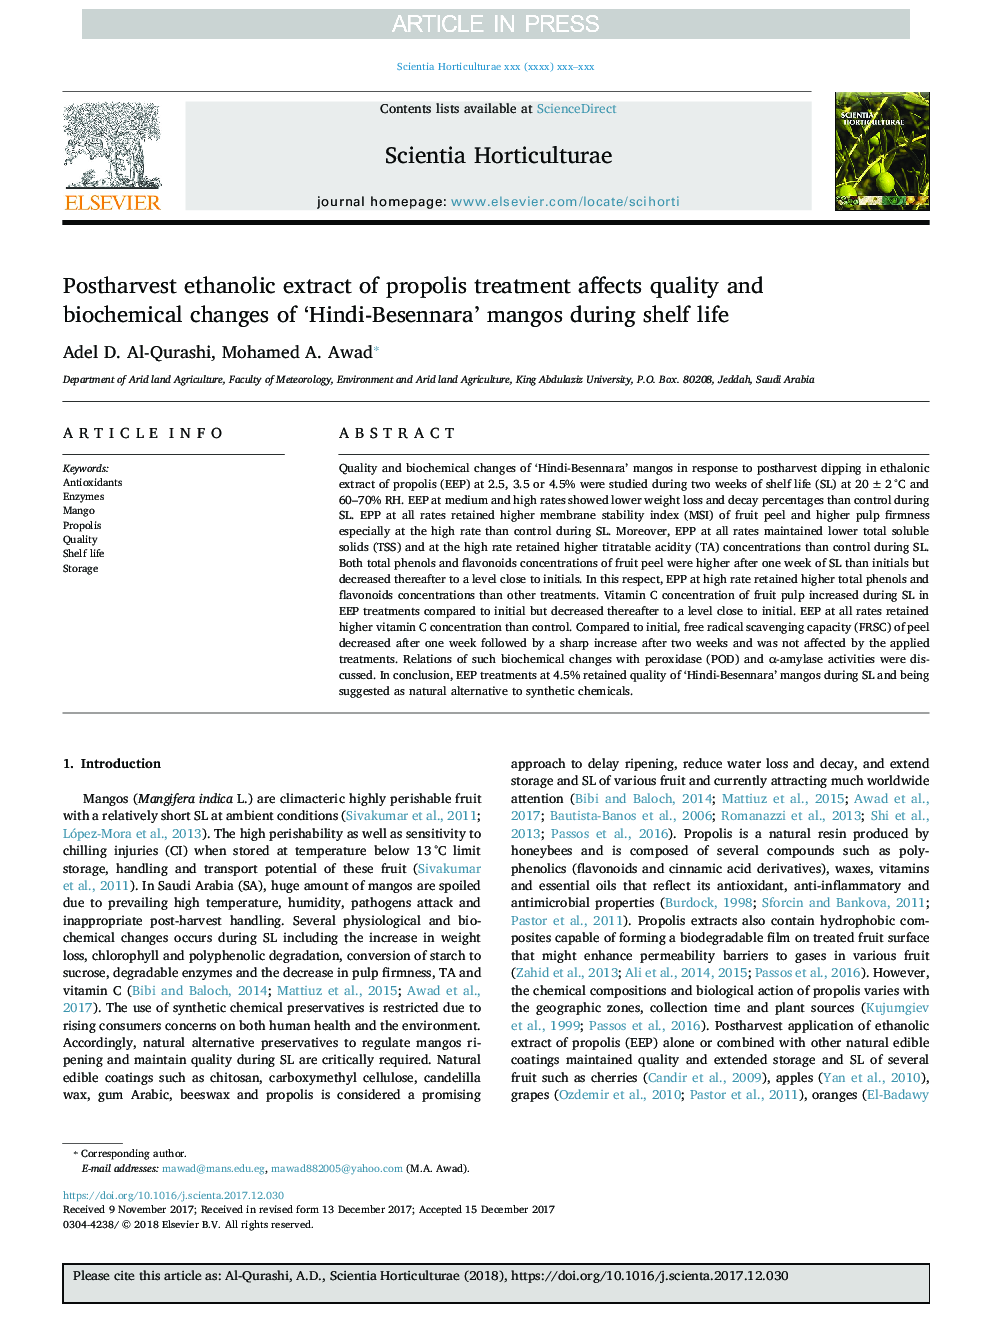 Postharvest ethanolic extract of propolis treatment affects quality and biochemical changes of 'Hindi-Besennara' mangos during shelf life